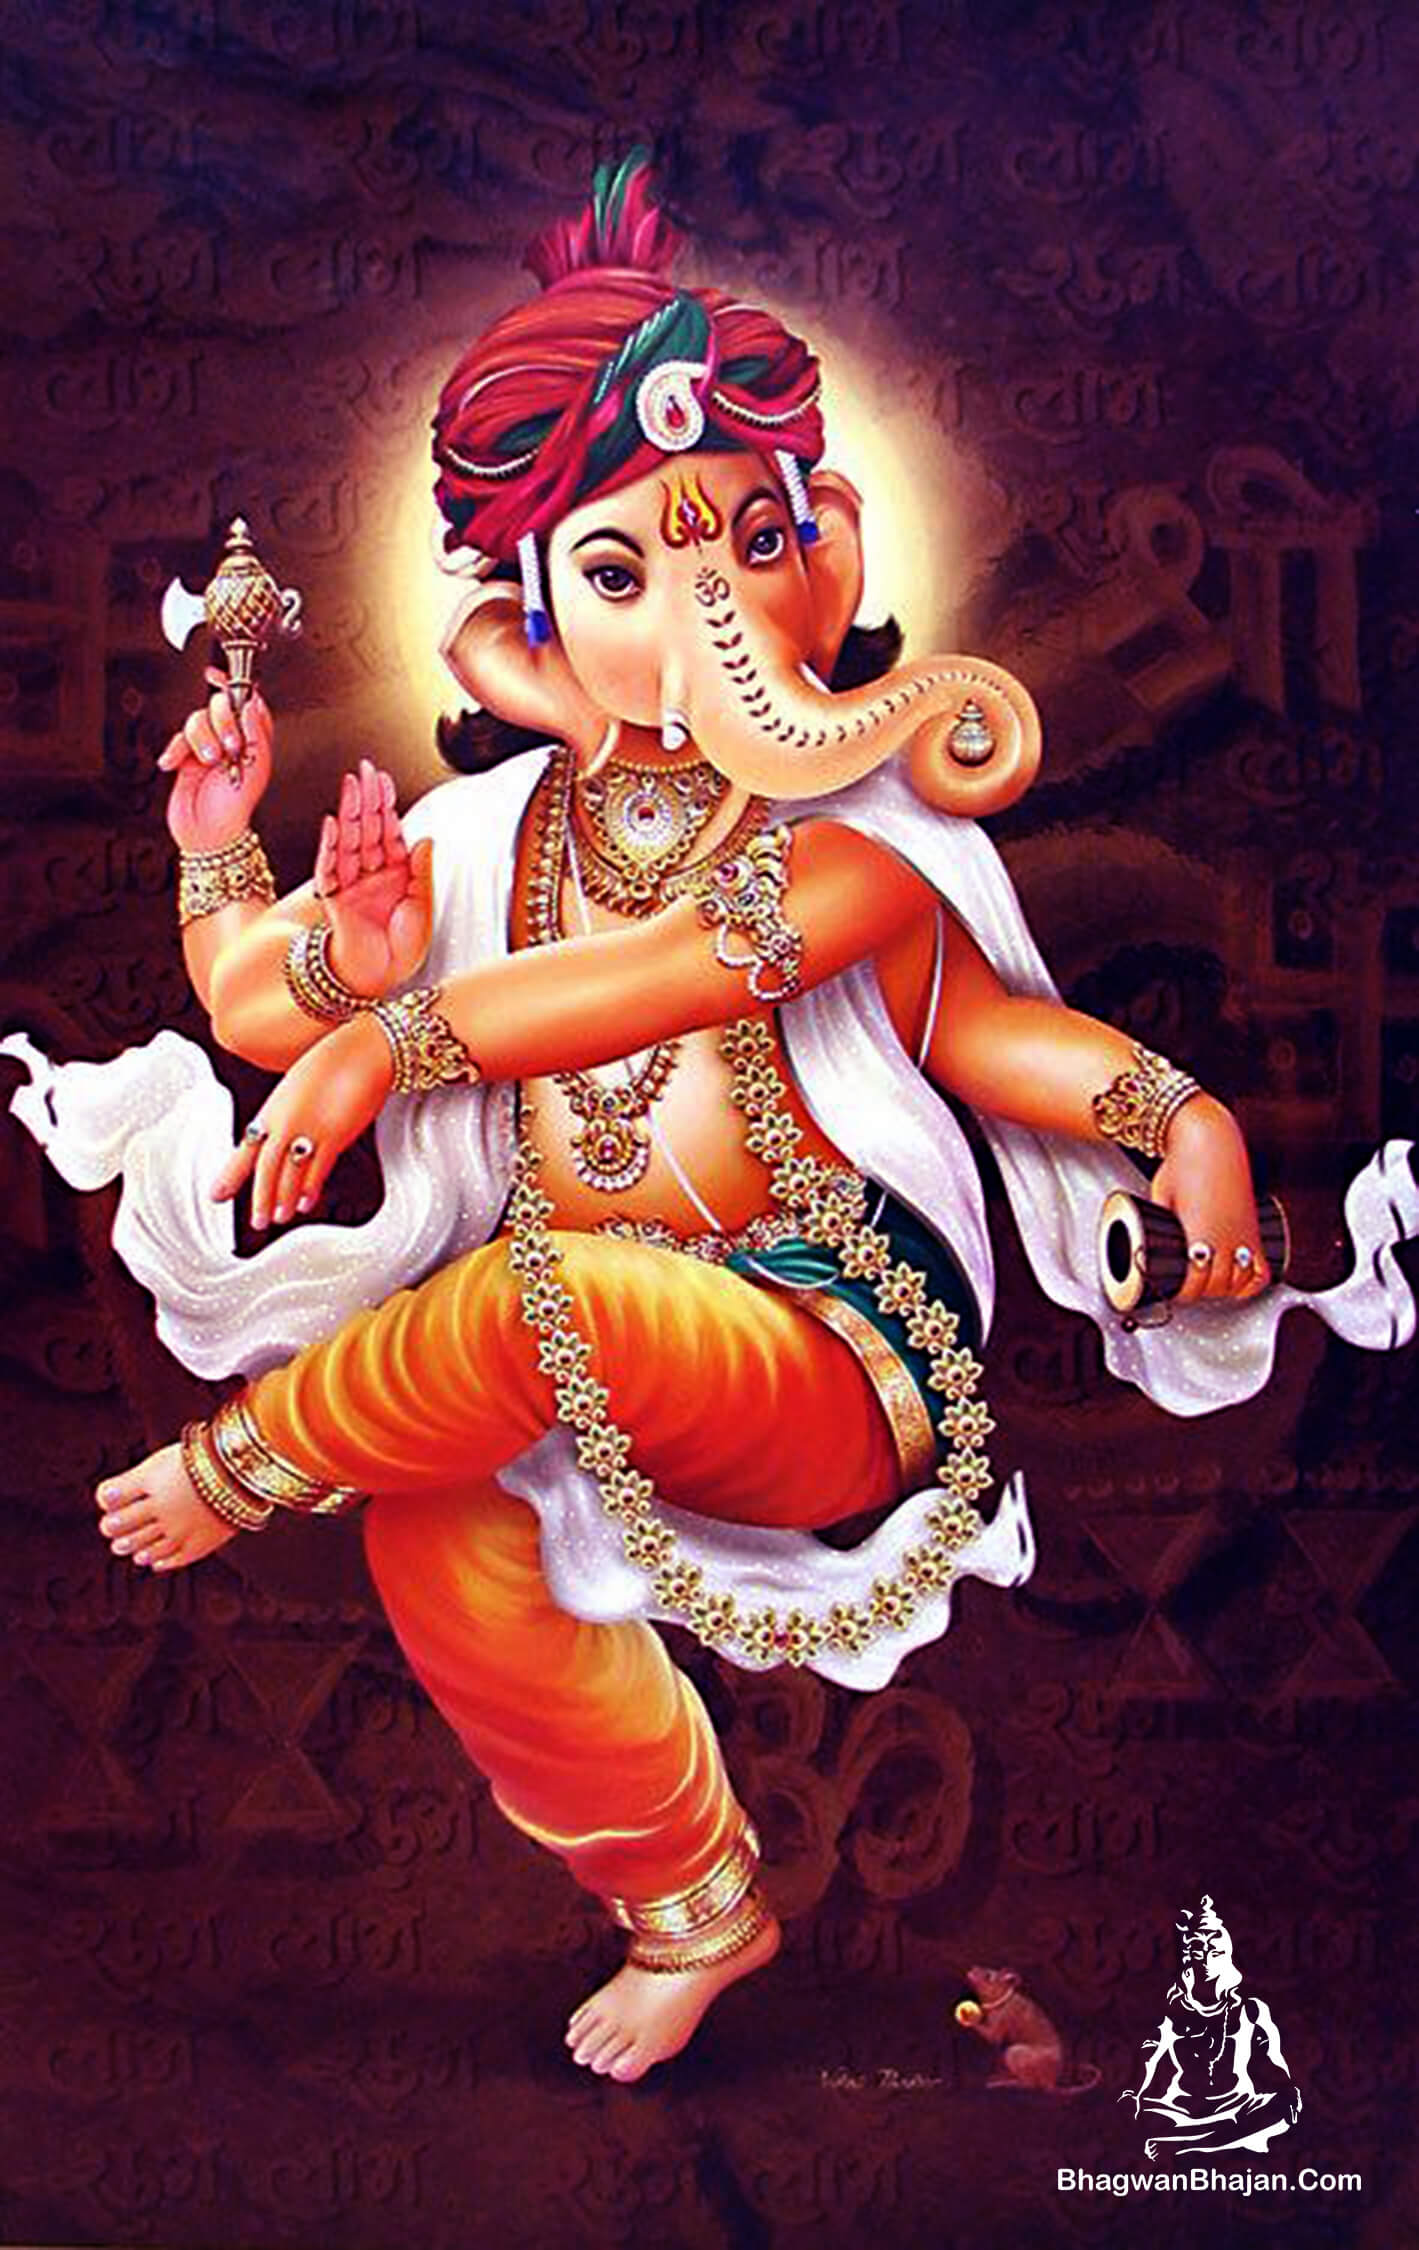 Download Bhagwan Shree Ganesh Free Hd Wallpaper Ganpati Bappa Wallpaper Latest New Lord Ganesha Pictures Images Photos